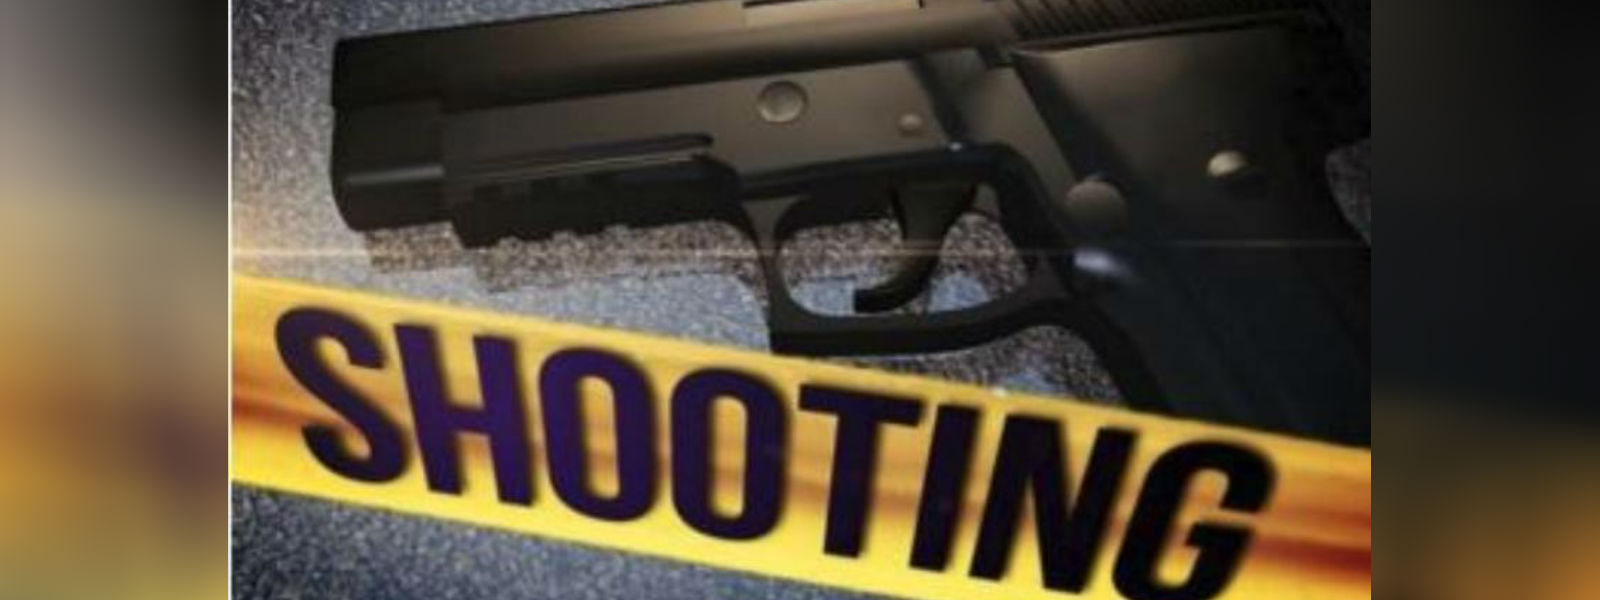 Woman reported dead following shooting in Beliatta